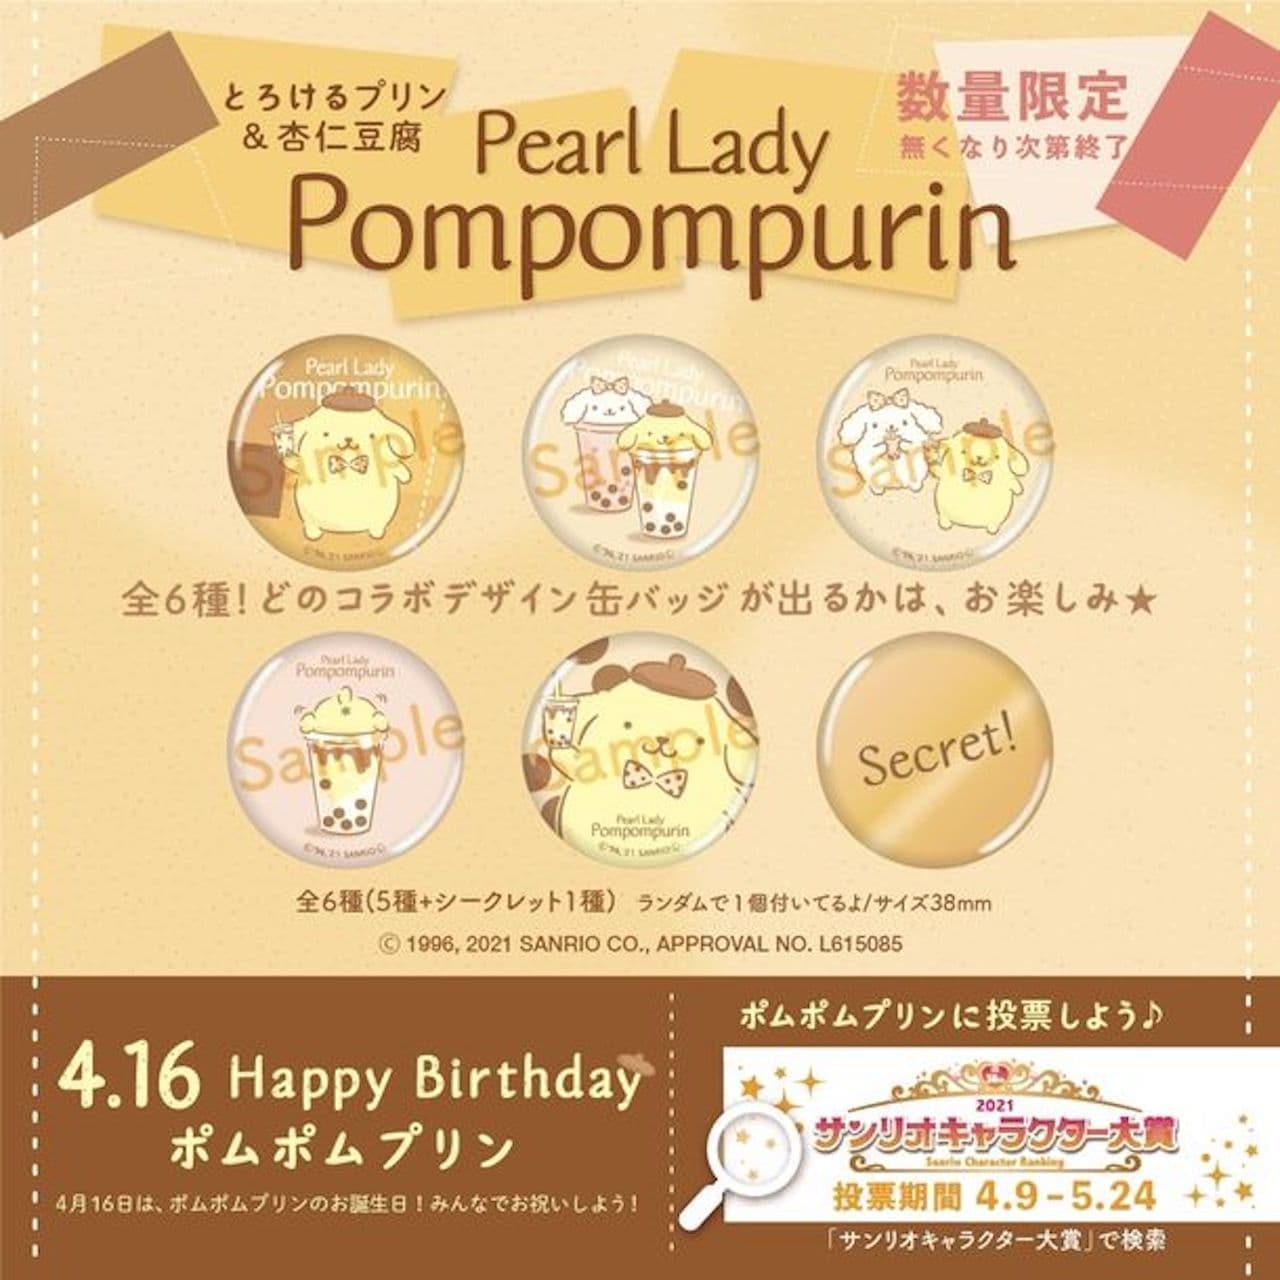 Pearl Lady "Pompompurin" Pudding Milk ""